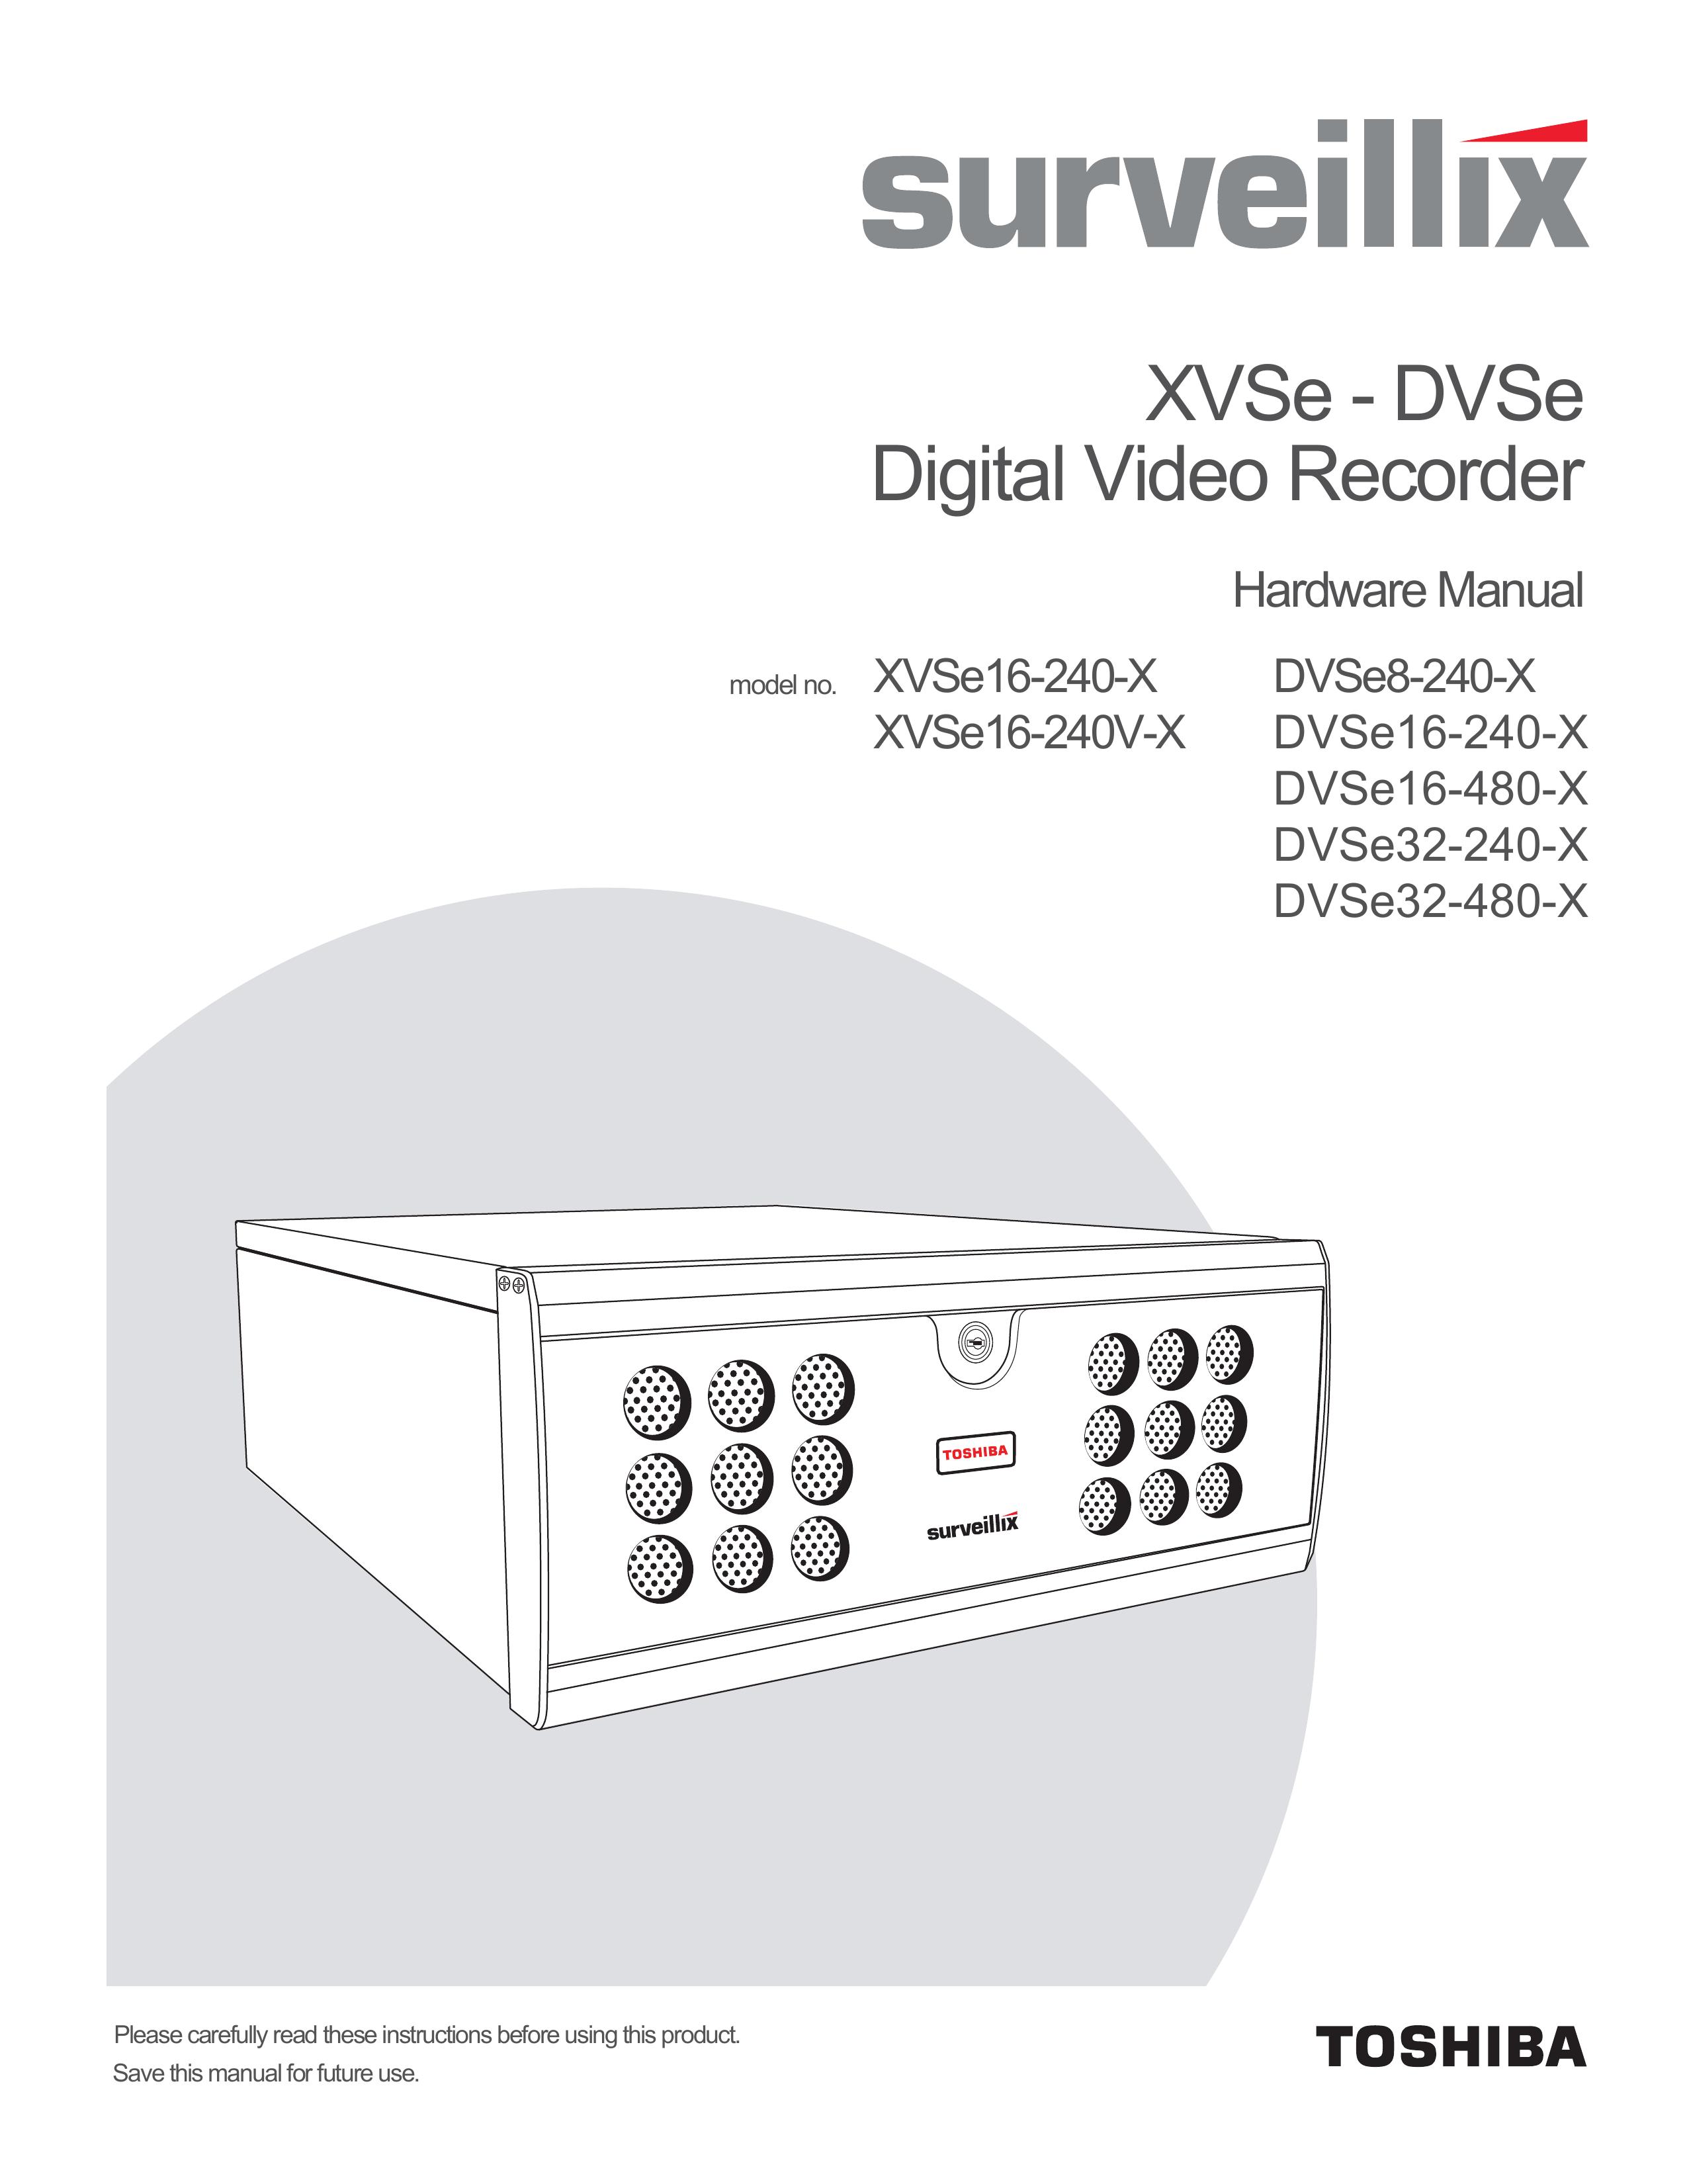 Toshiba DVSe8-240-X Digital Photo Keychain User Manual